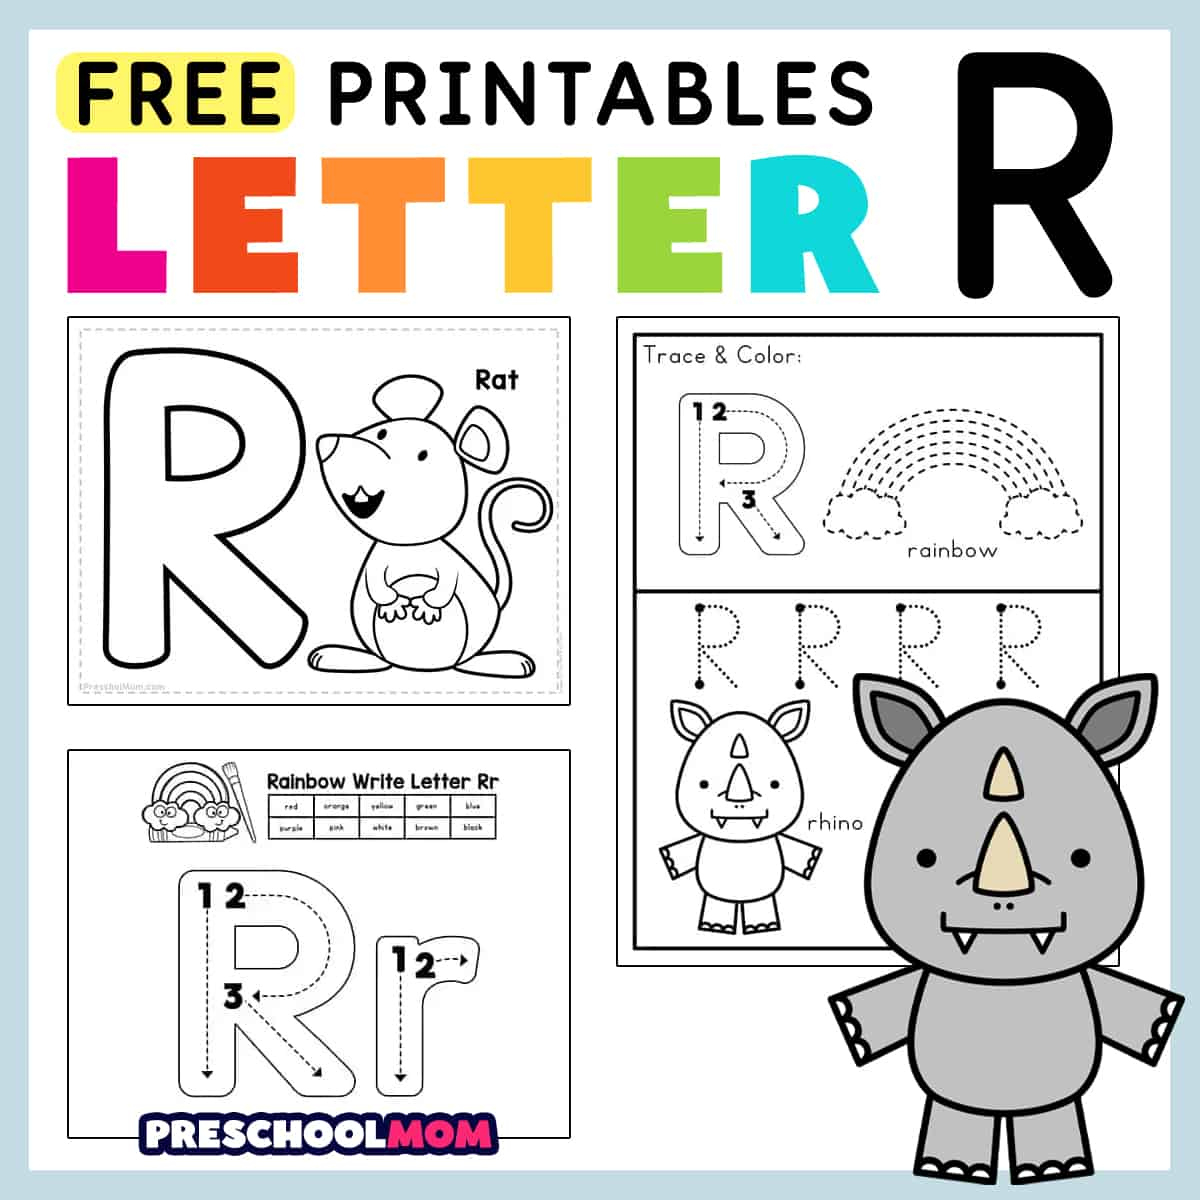 Letter R Preschool Printables - Preschool Mom intended for Free Printable Preschool Worksheets for the Letter R